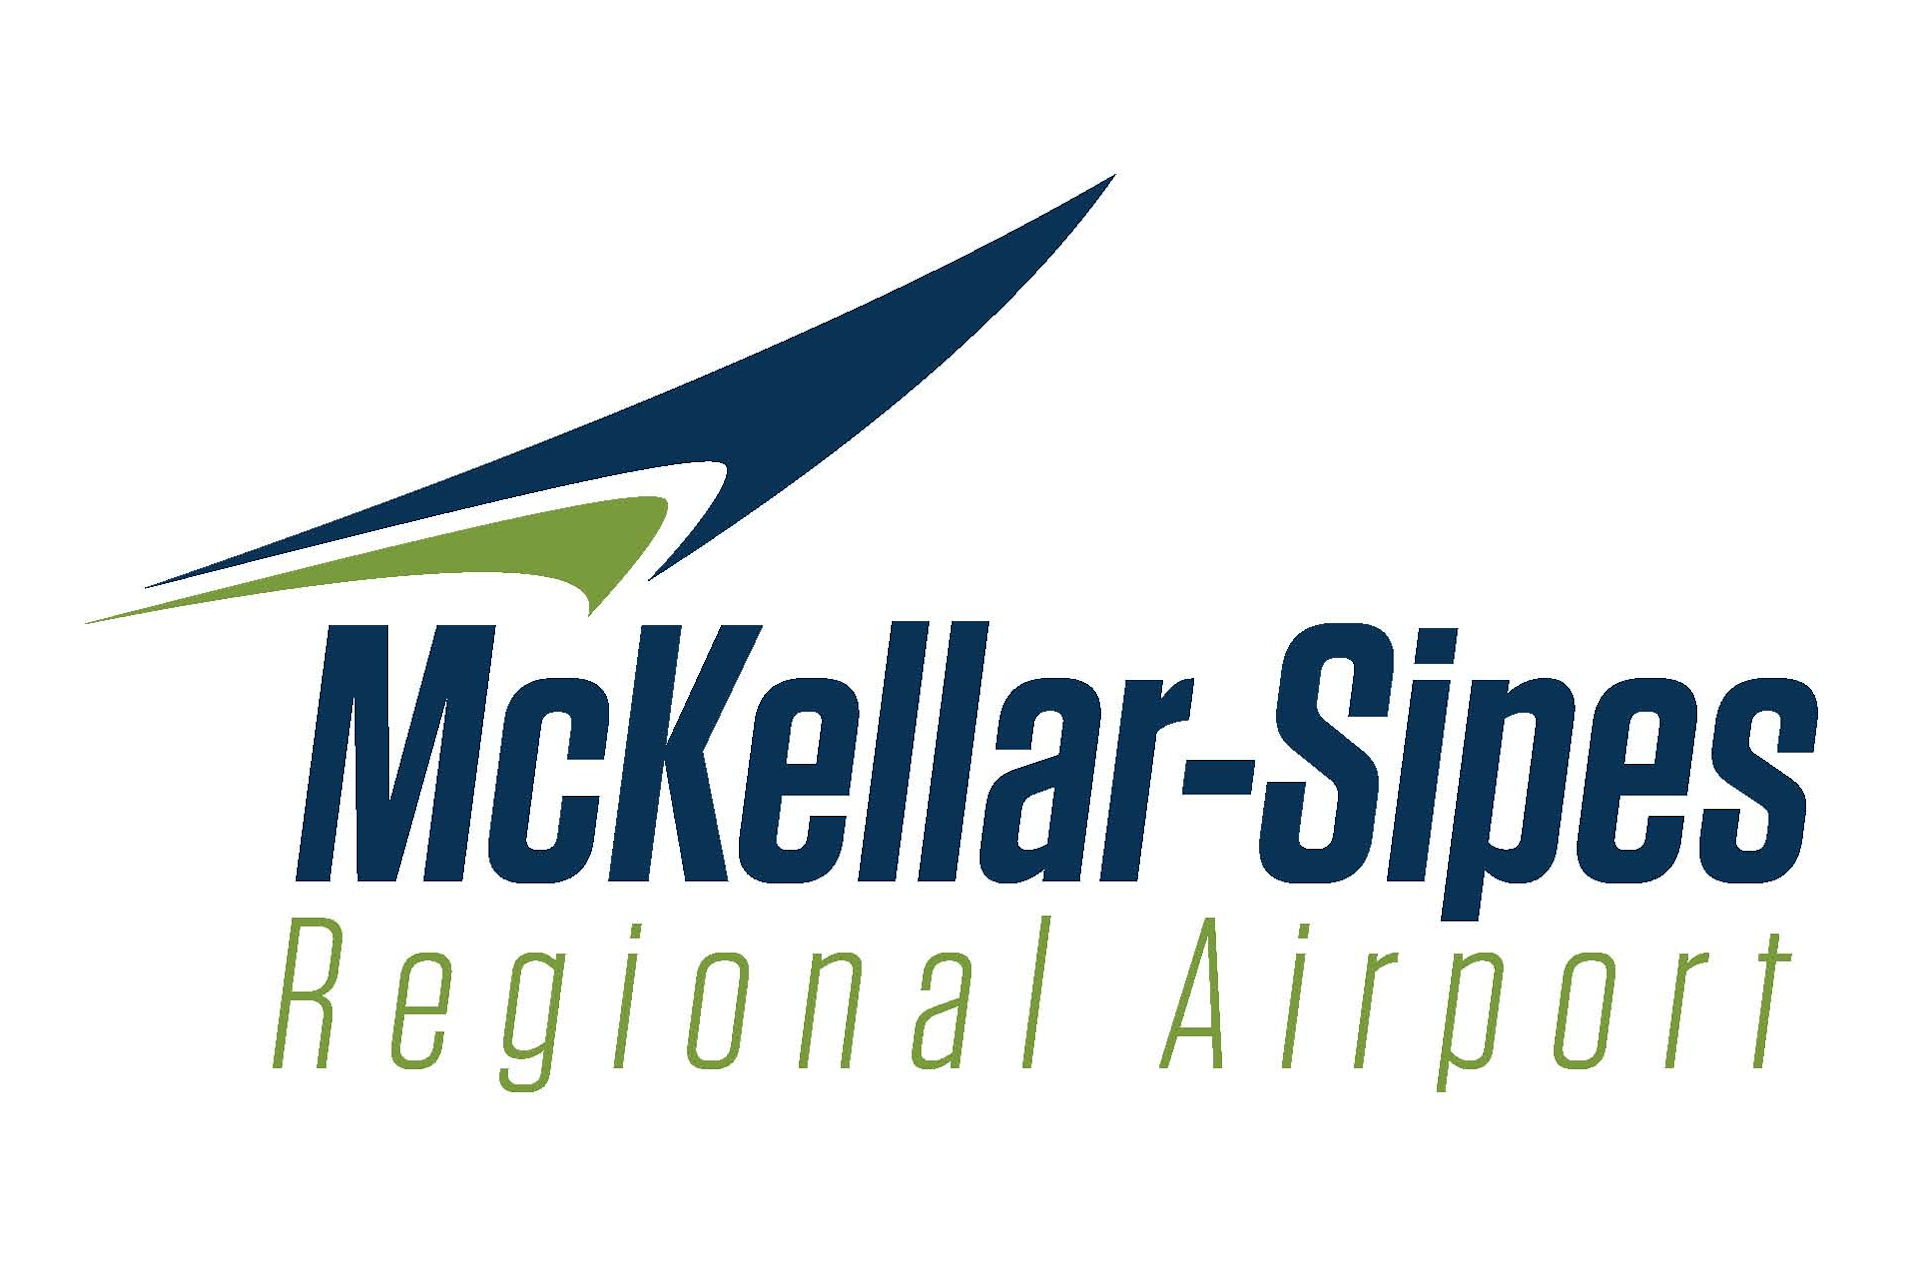 McKellar-Sipes Regional Airport